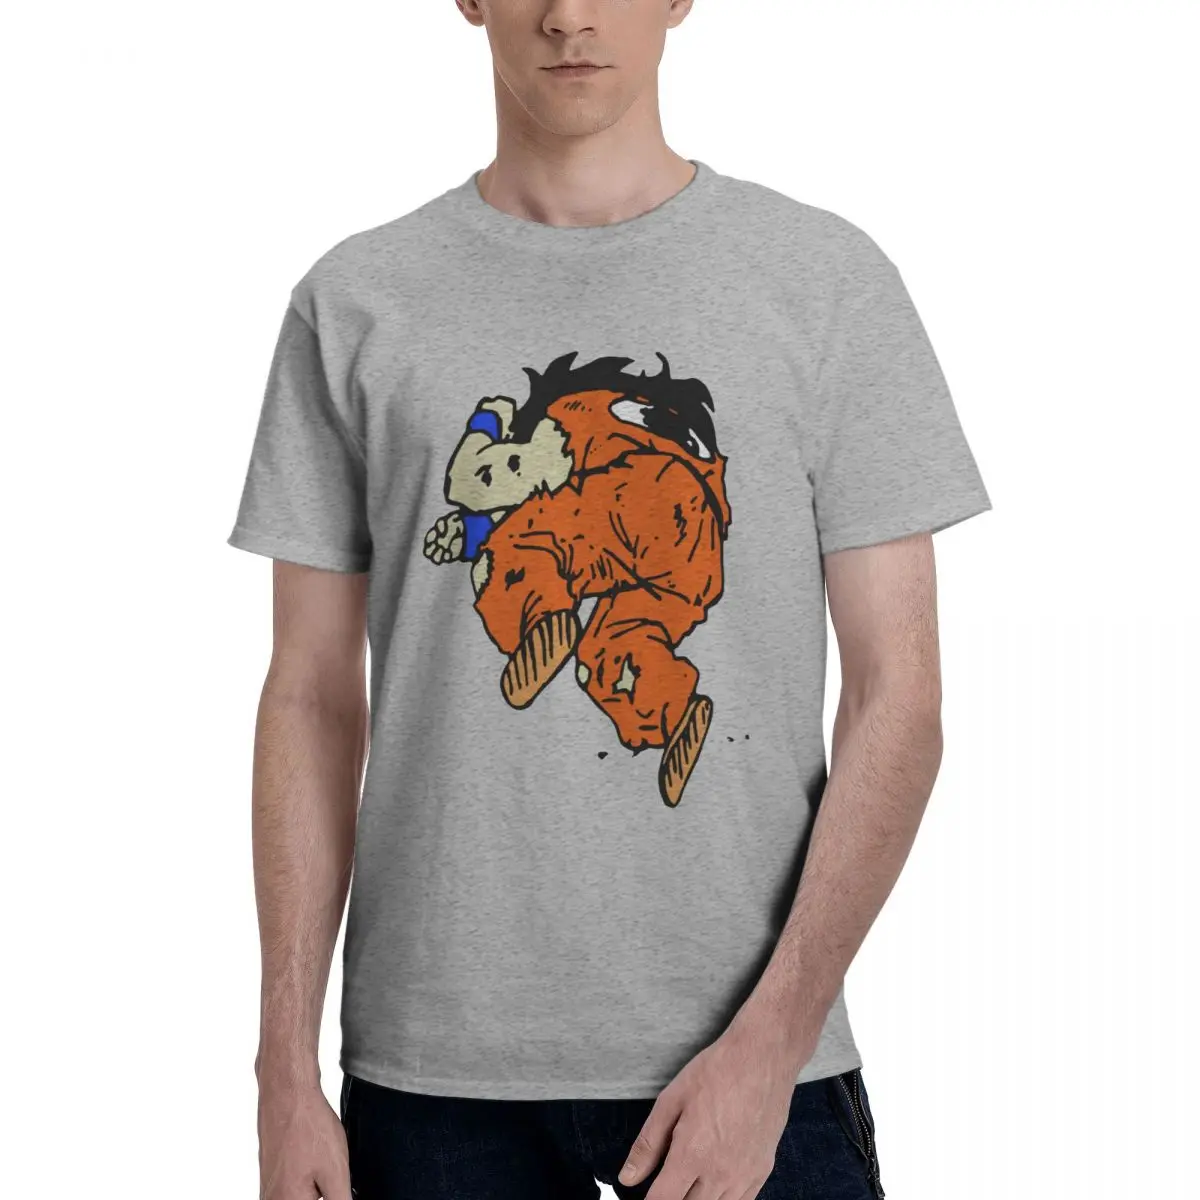 

Bandai Dragon Ball Goku T-Shirt Men Anime Awesome Cotton Tee Shirt Crewneck Short Sleeve T Shirts Gift Idea Clothes